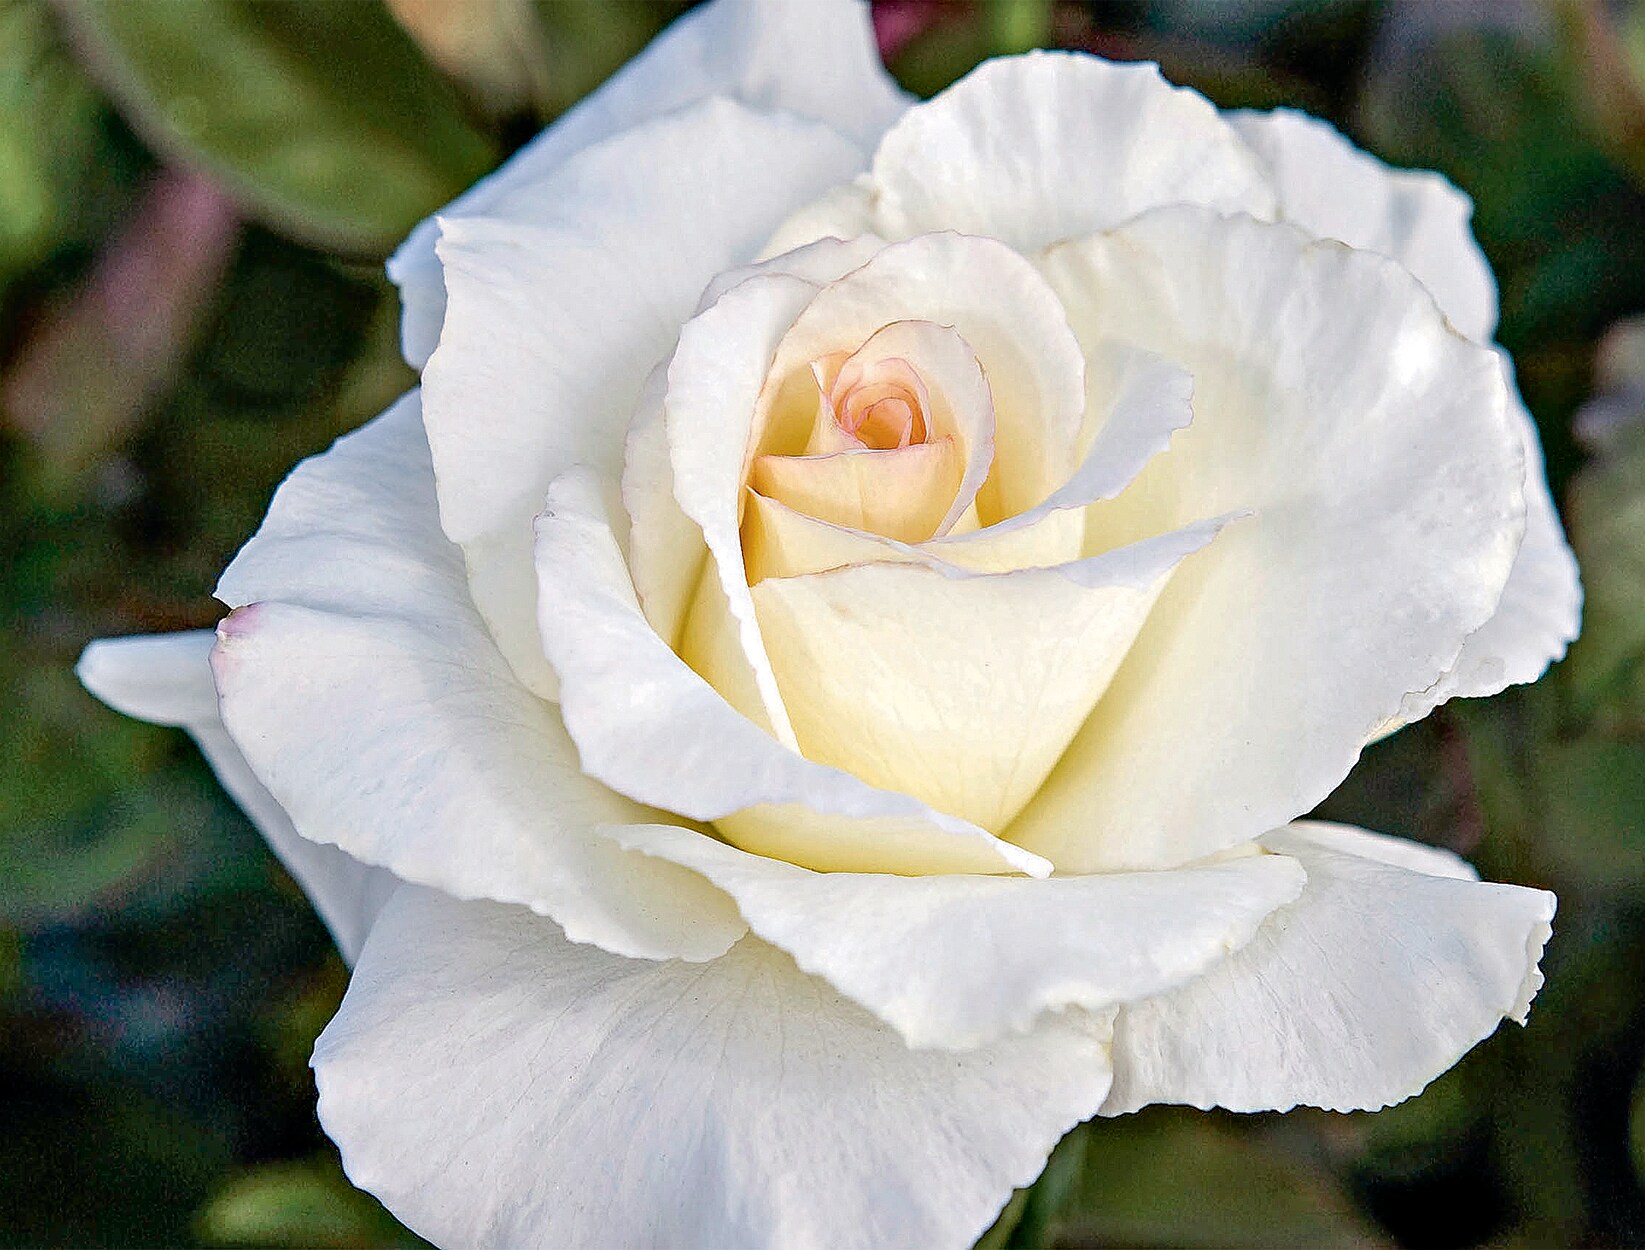 Wardrobe White Rose Wedding Gift Flower Love Natural Purity Flowering Plant 